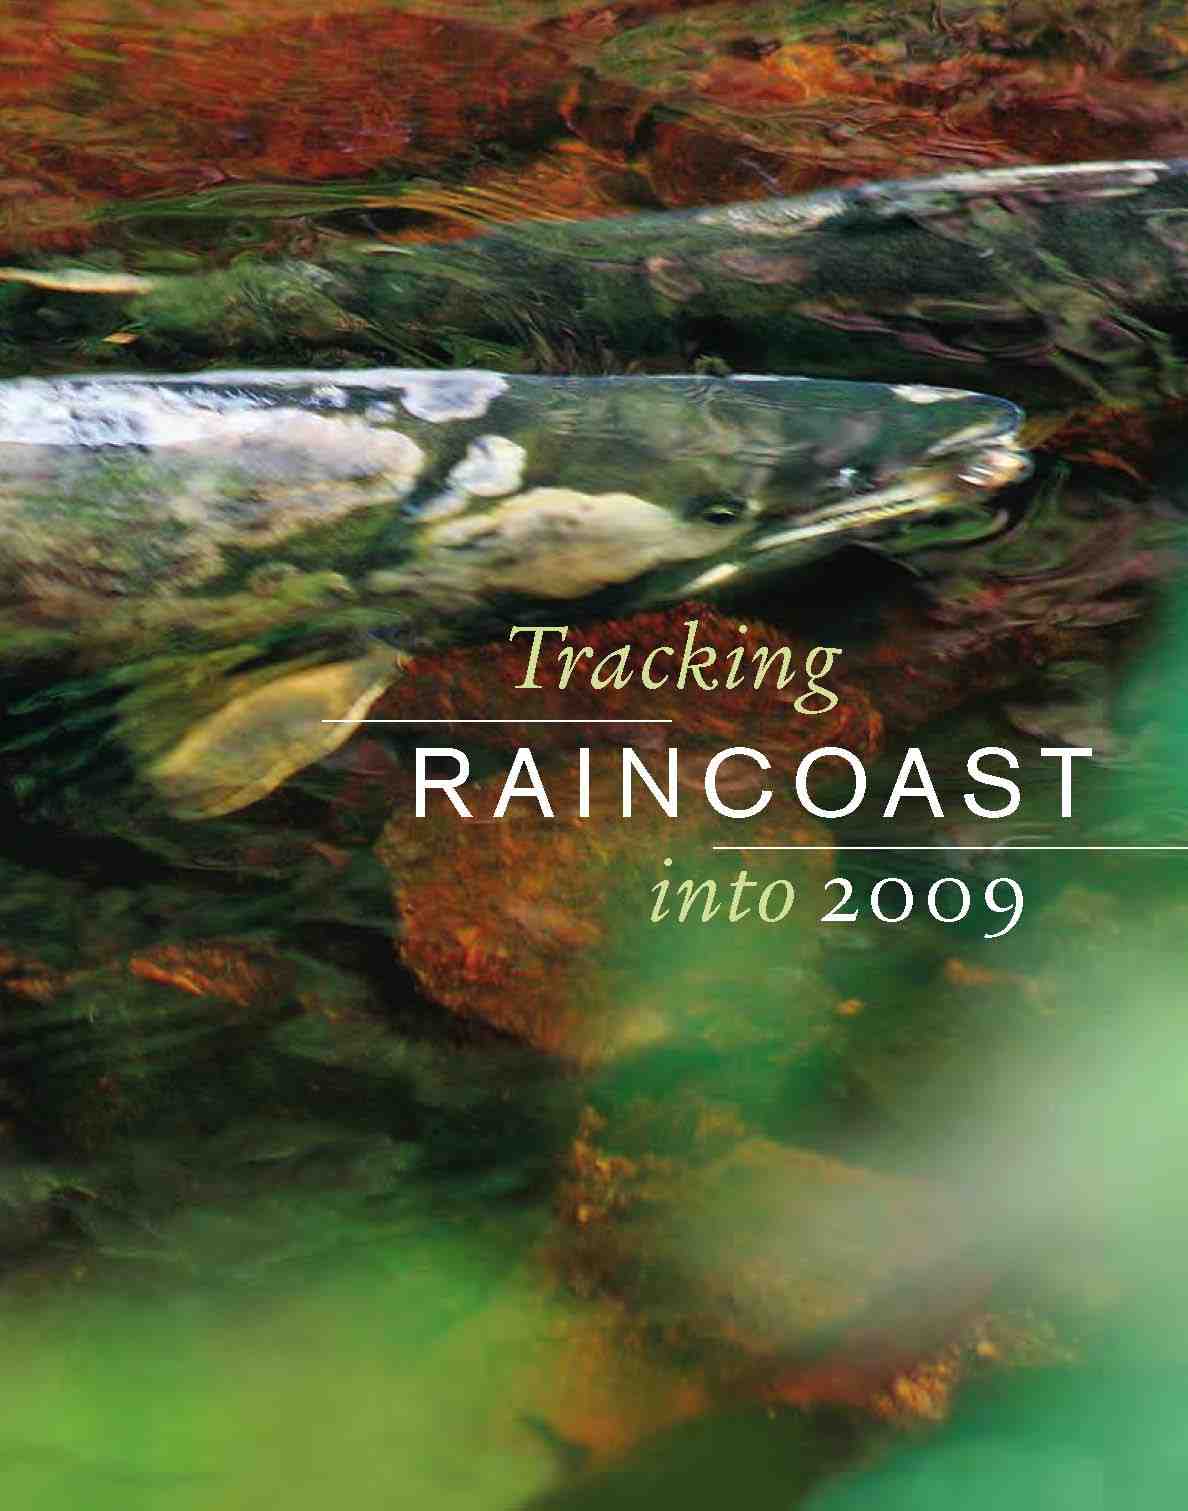 Tracking raincoast into 2009.